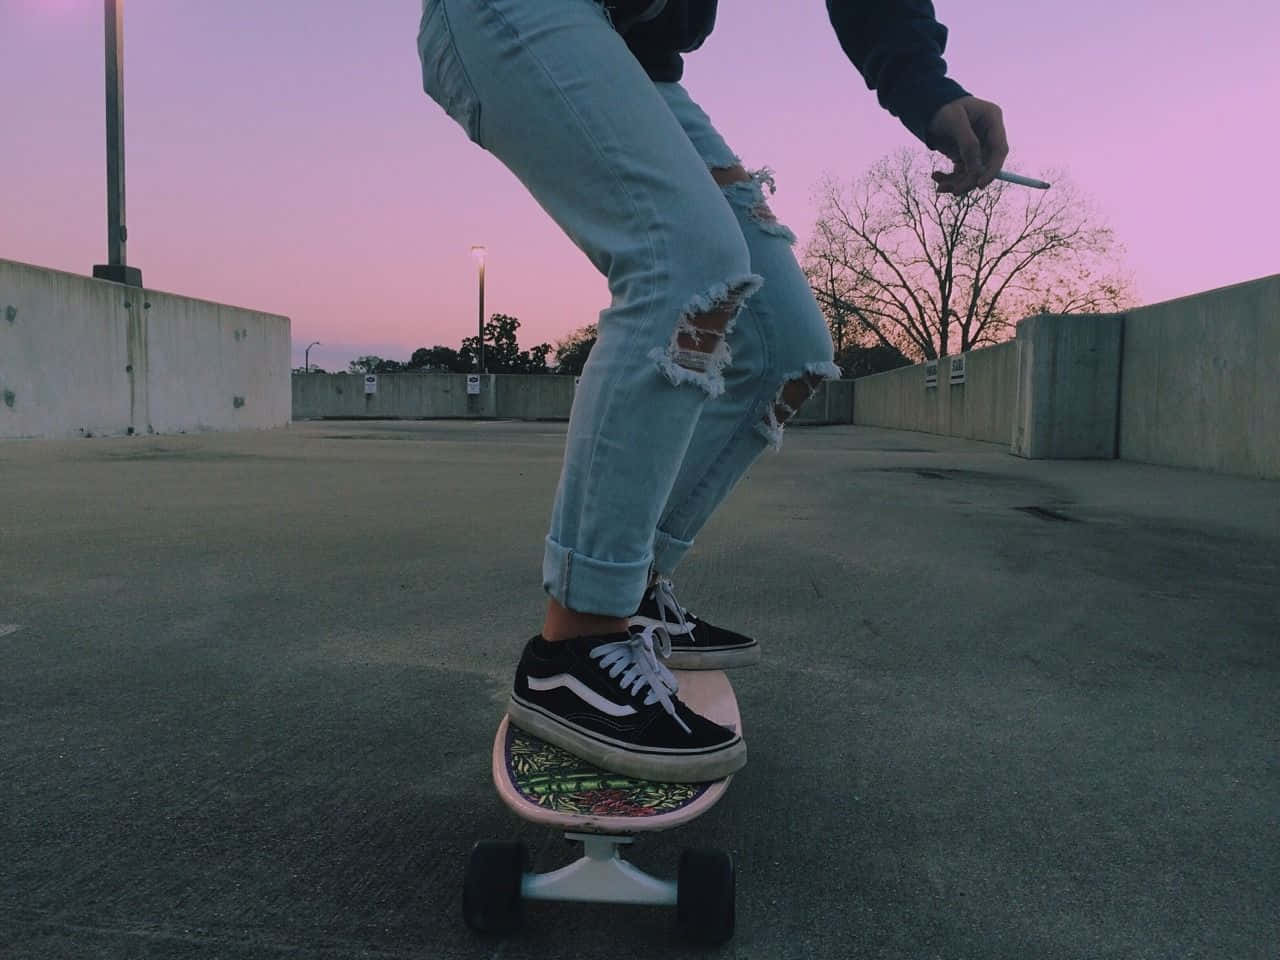 Image  Skateboarder shredding through the city